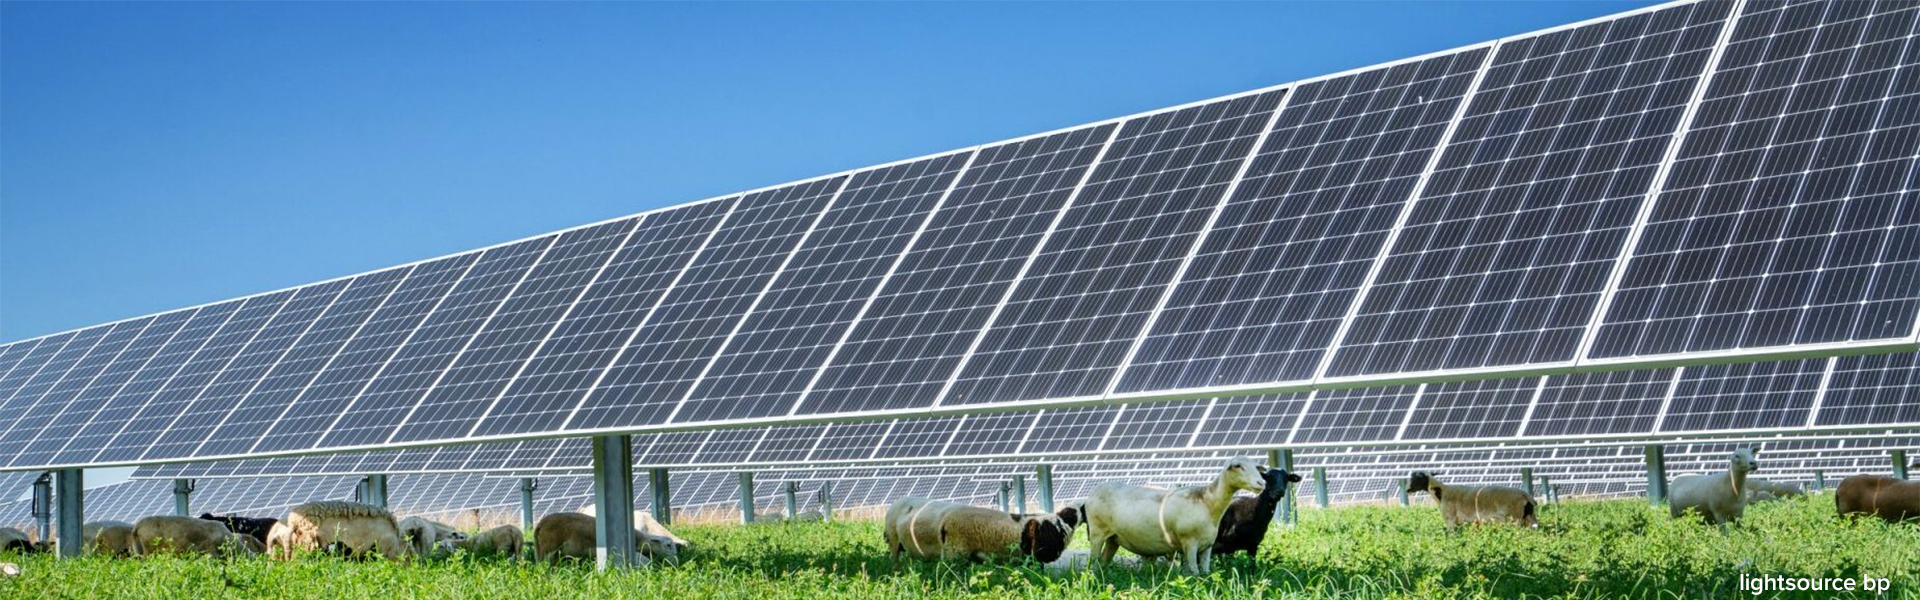 Penn State Solar Farm